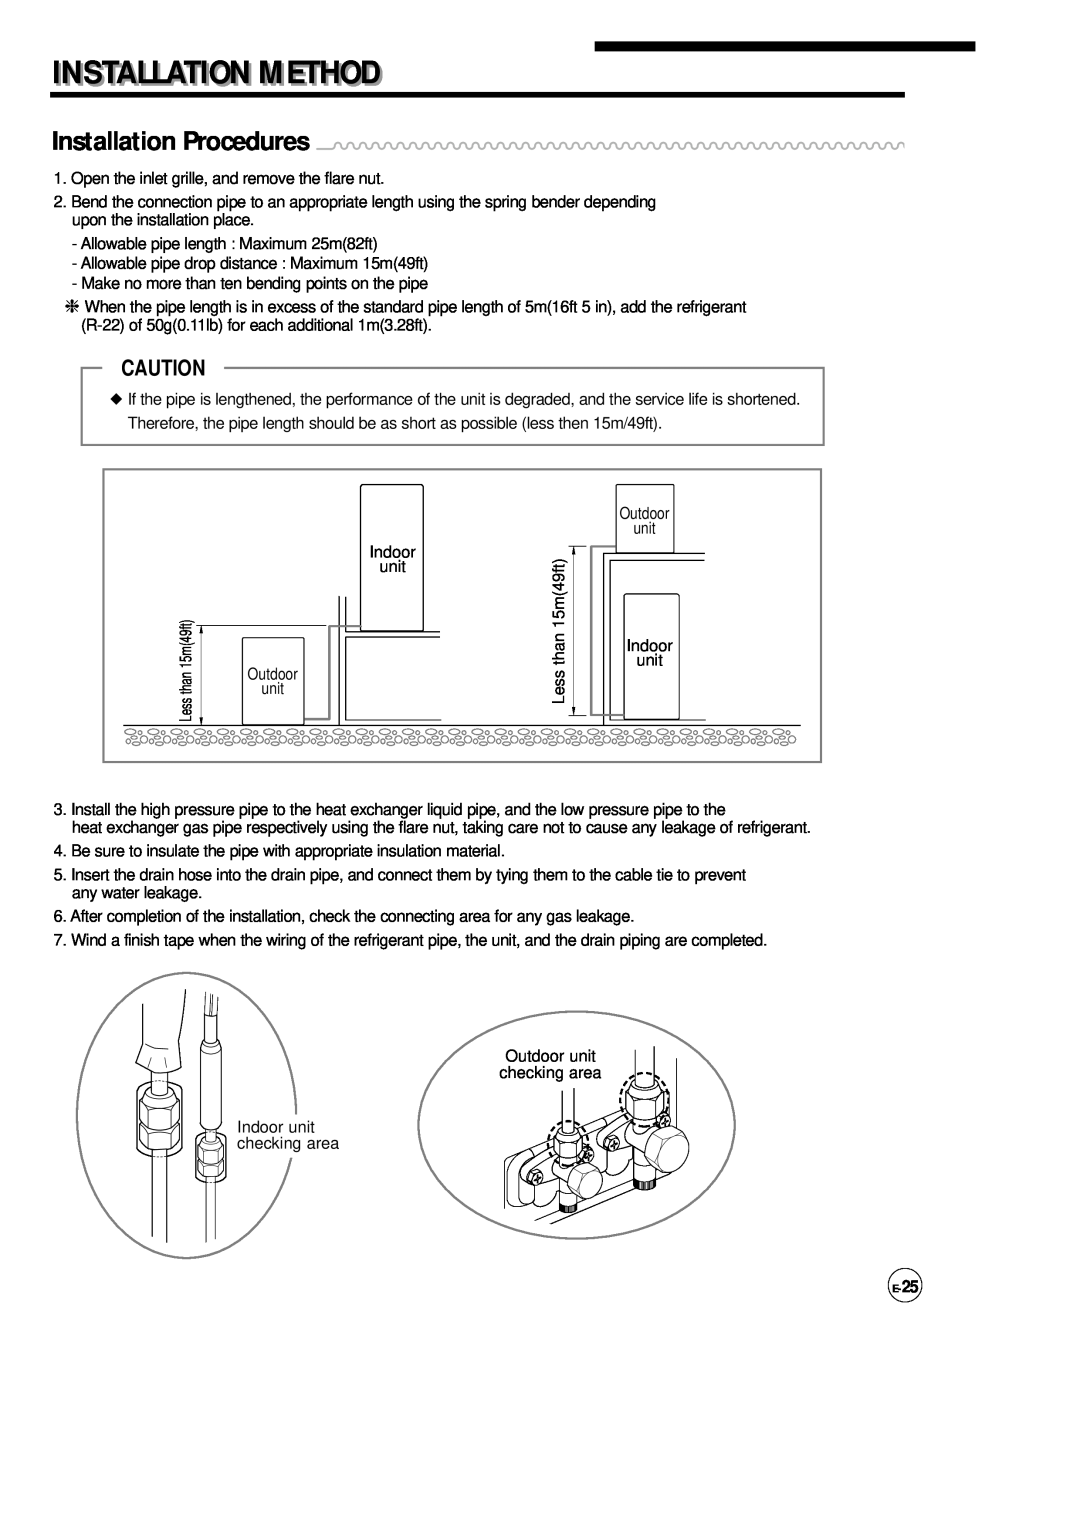 Samsung AP500F installation manual Installationi I Method, Installation Procedures 